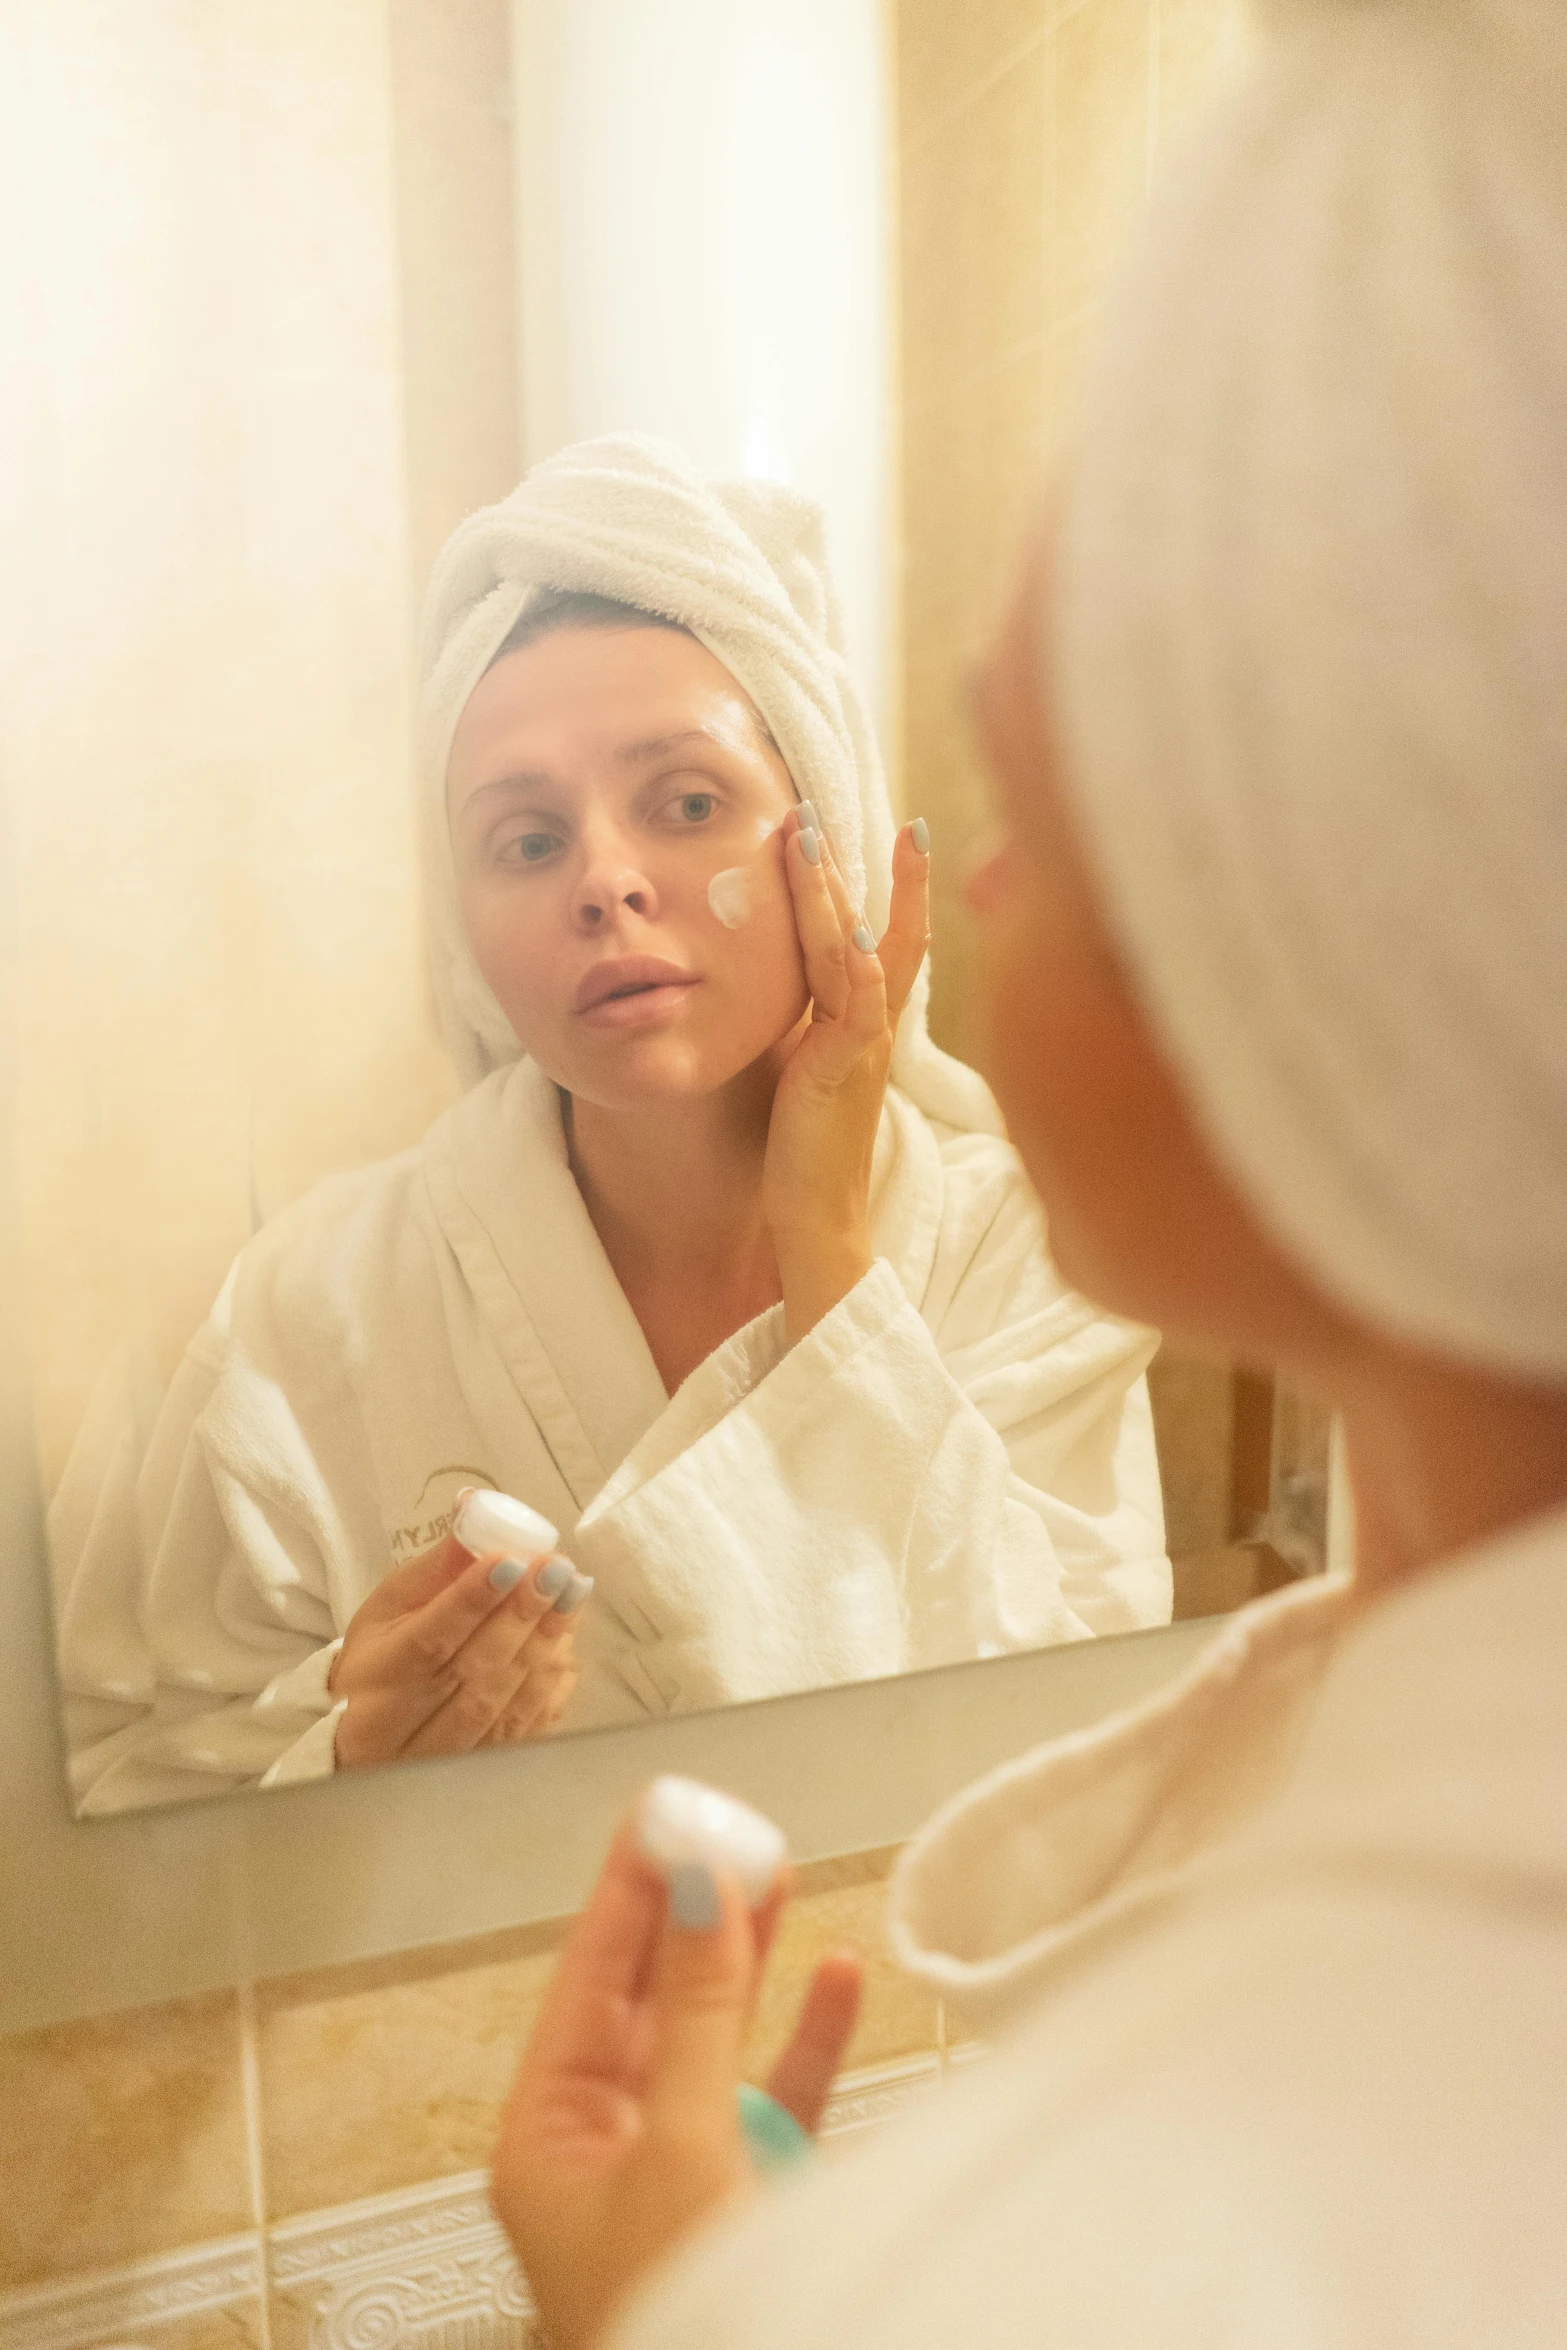 a woman brushing her teeth in front of a mirror, a portrait, by Julian Allen, shutterstock, renaissance, wearing a white bathing cap, hotel room, splash image, taken at golden hour